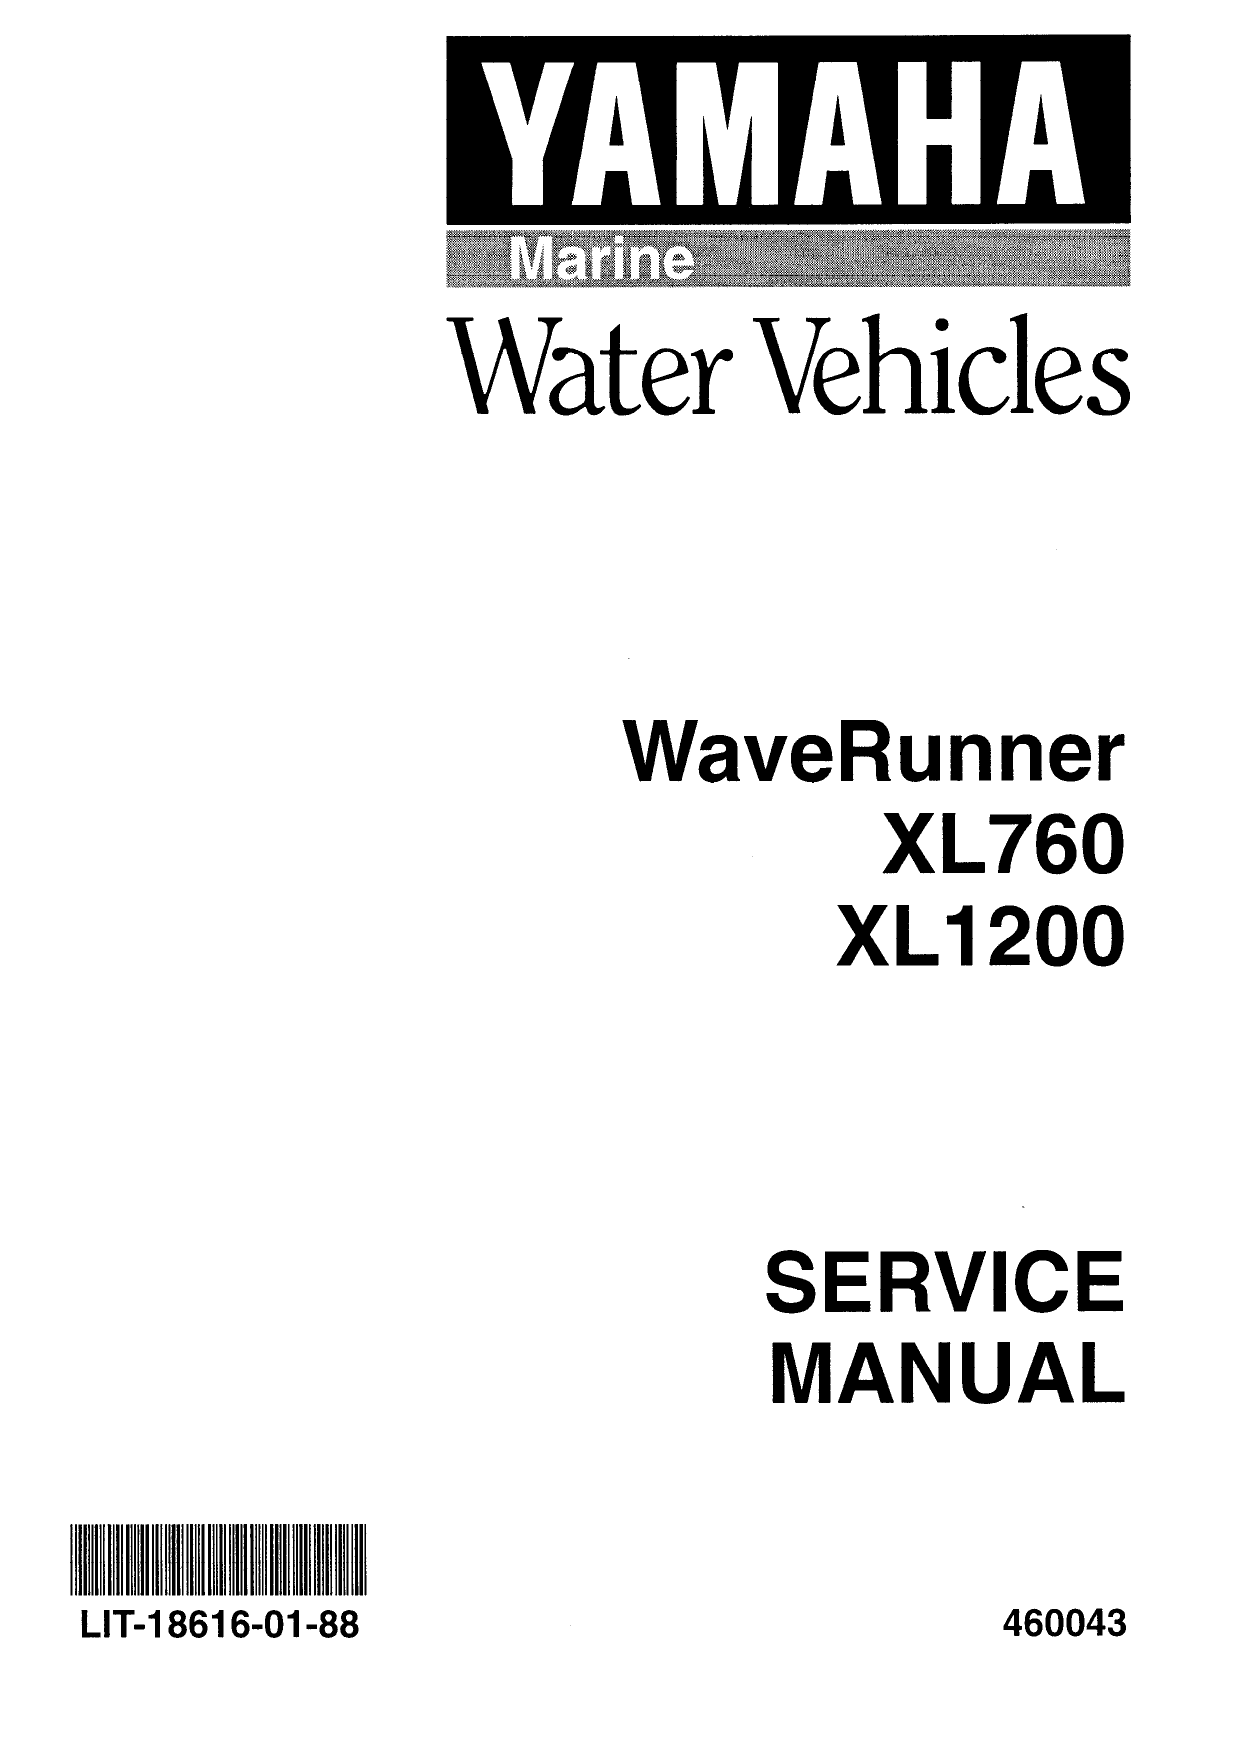 Yamaha Marine WaveRunner XL760, XL1200 service manual Preview image 1